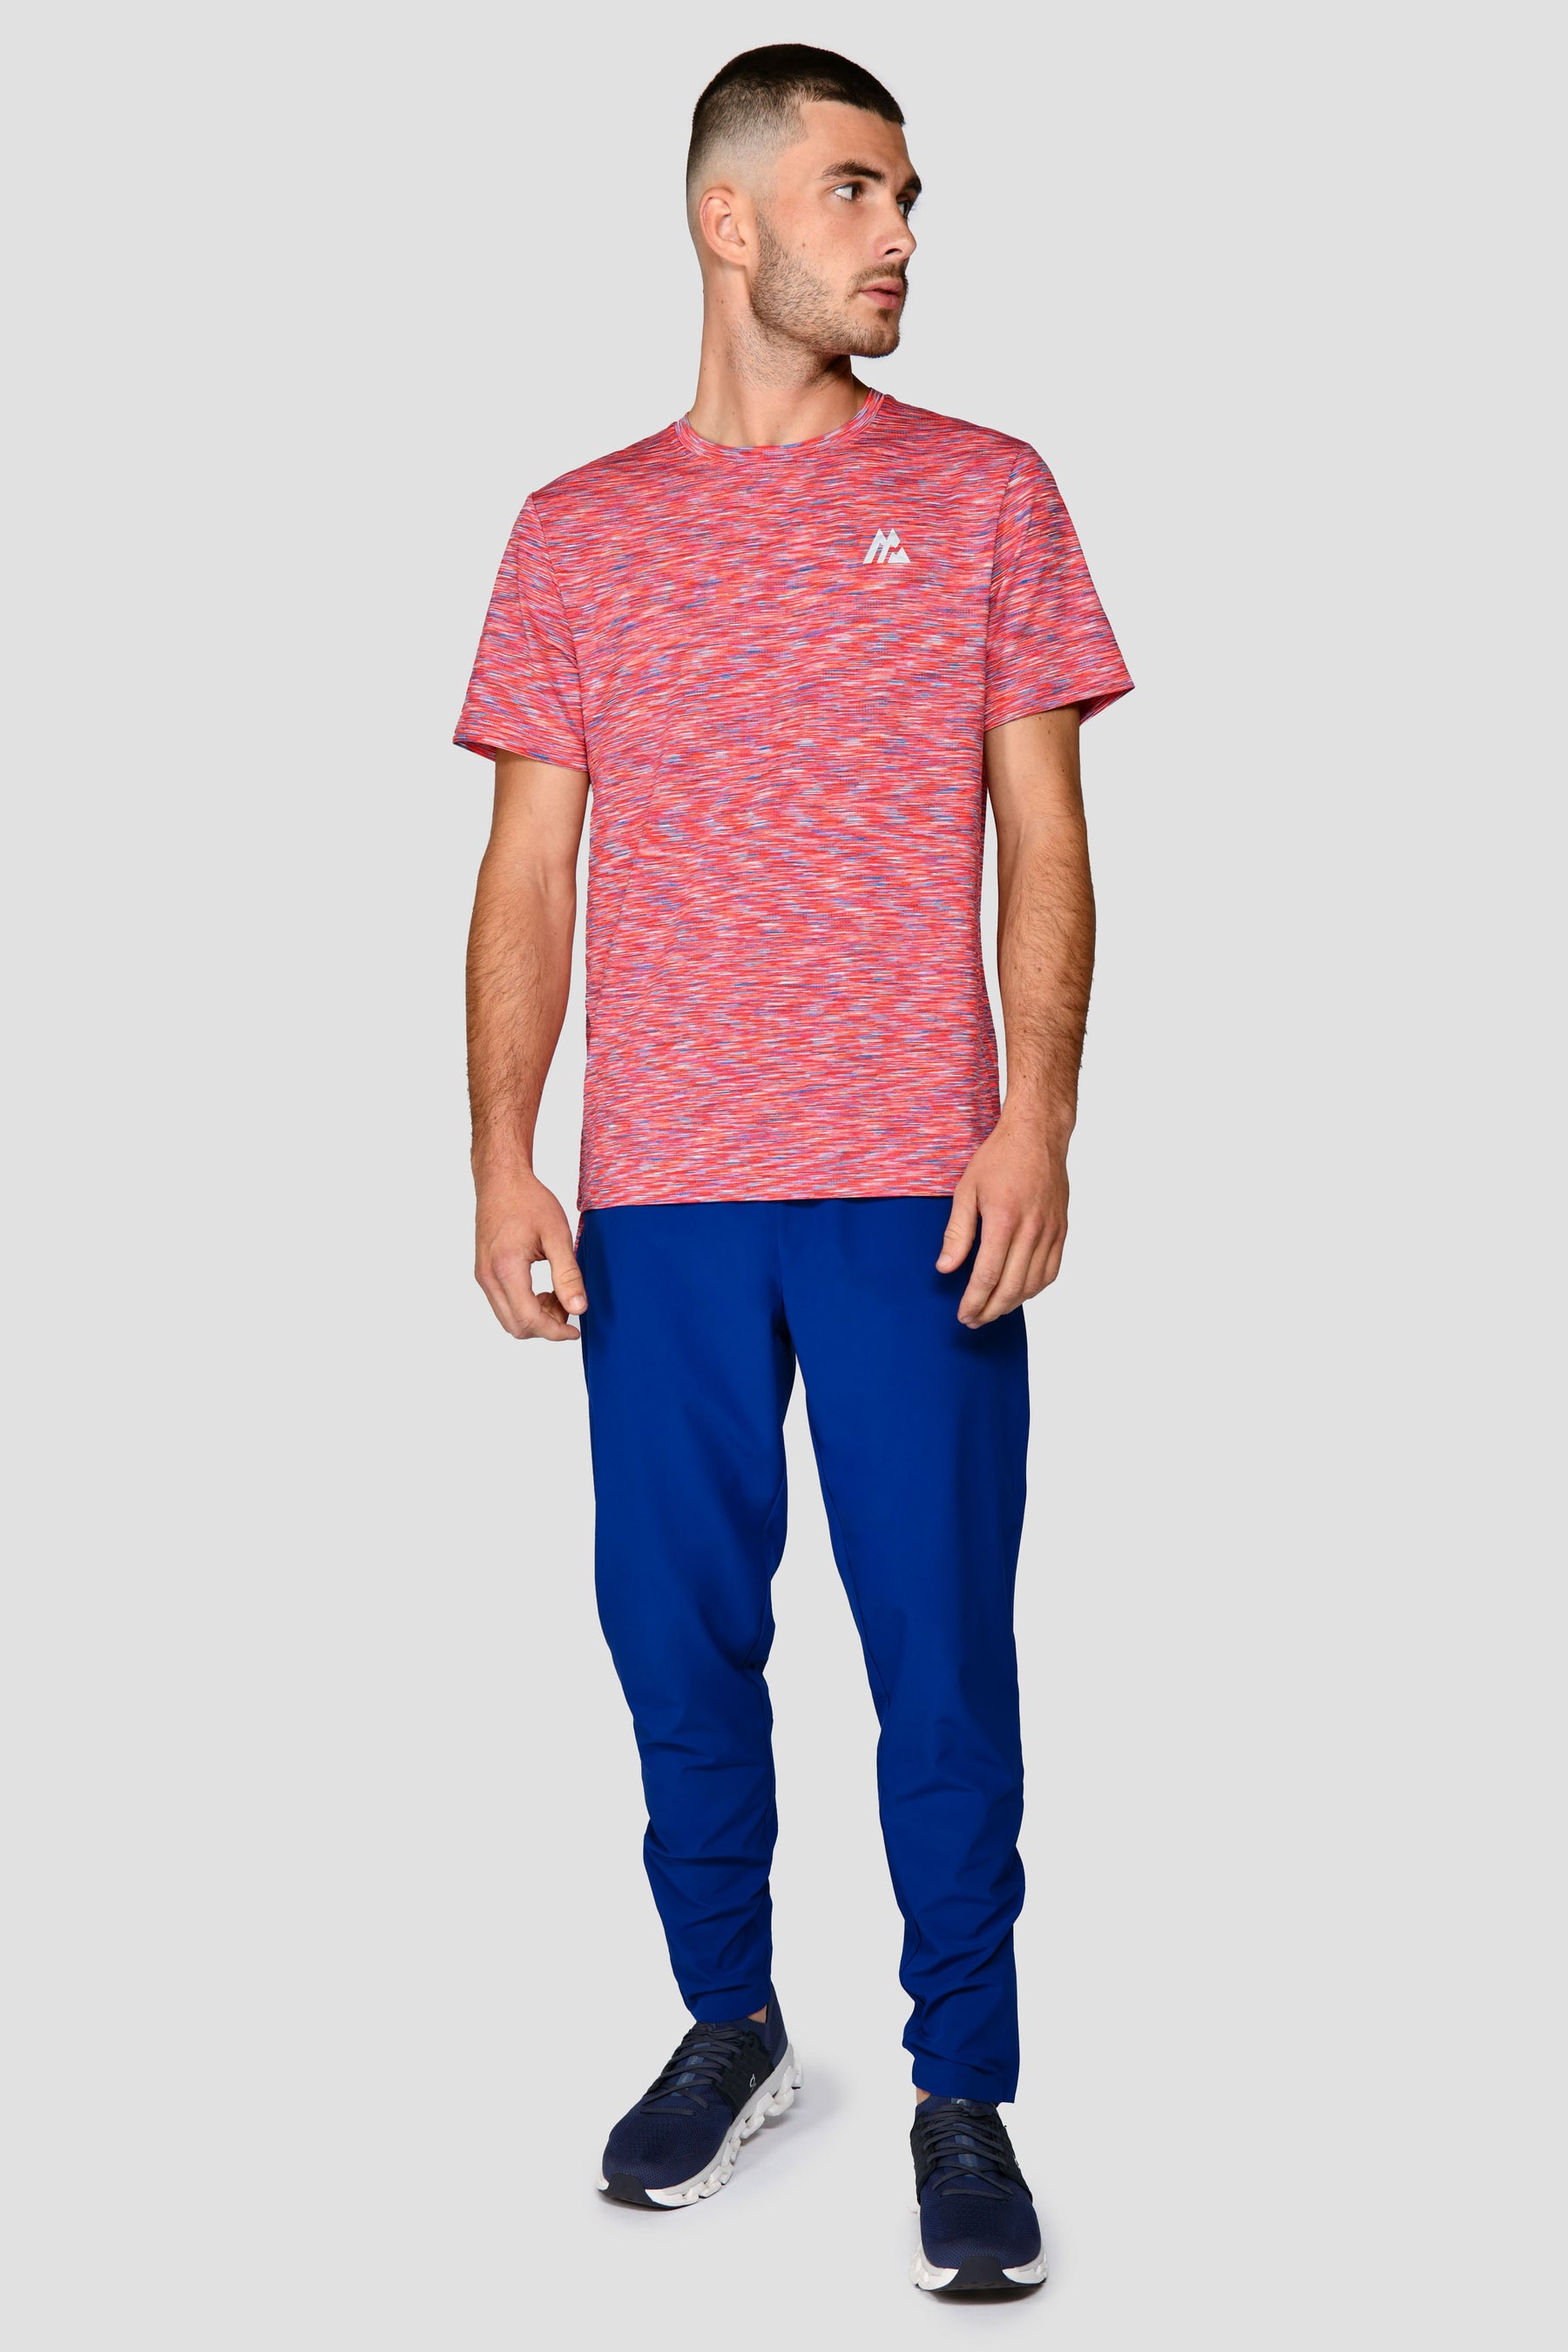 Trail 2.0 T-Shirt - Shocking Pink/Neon Blue Multi